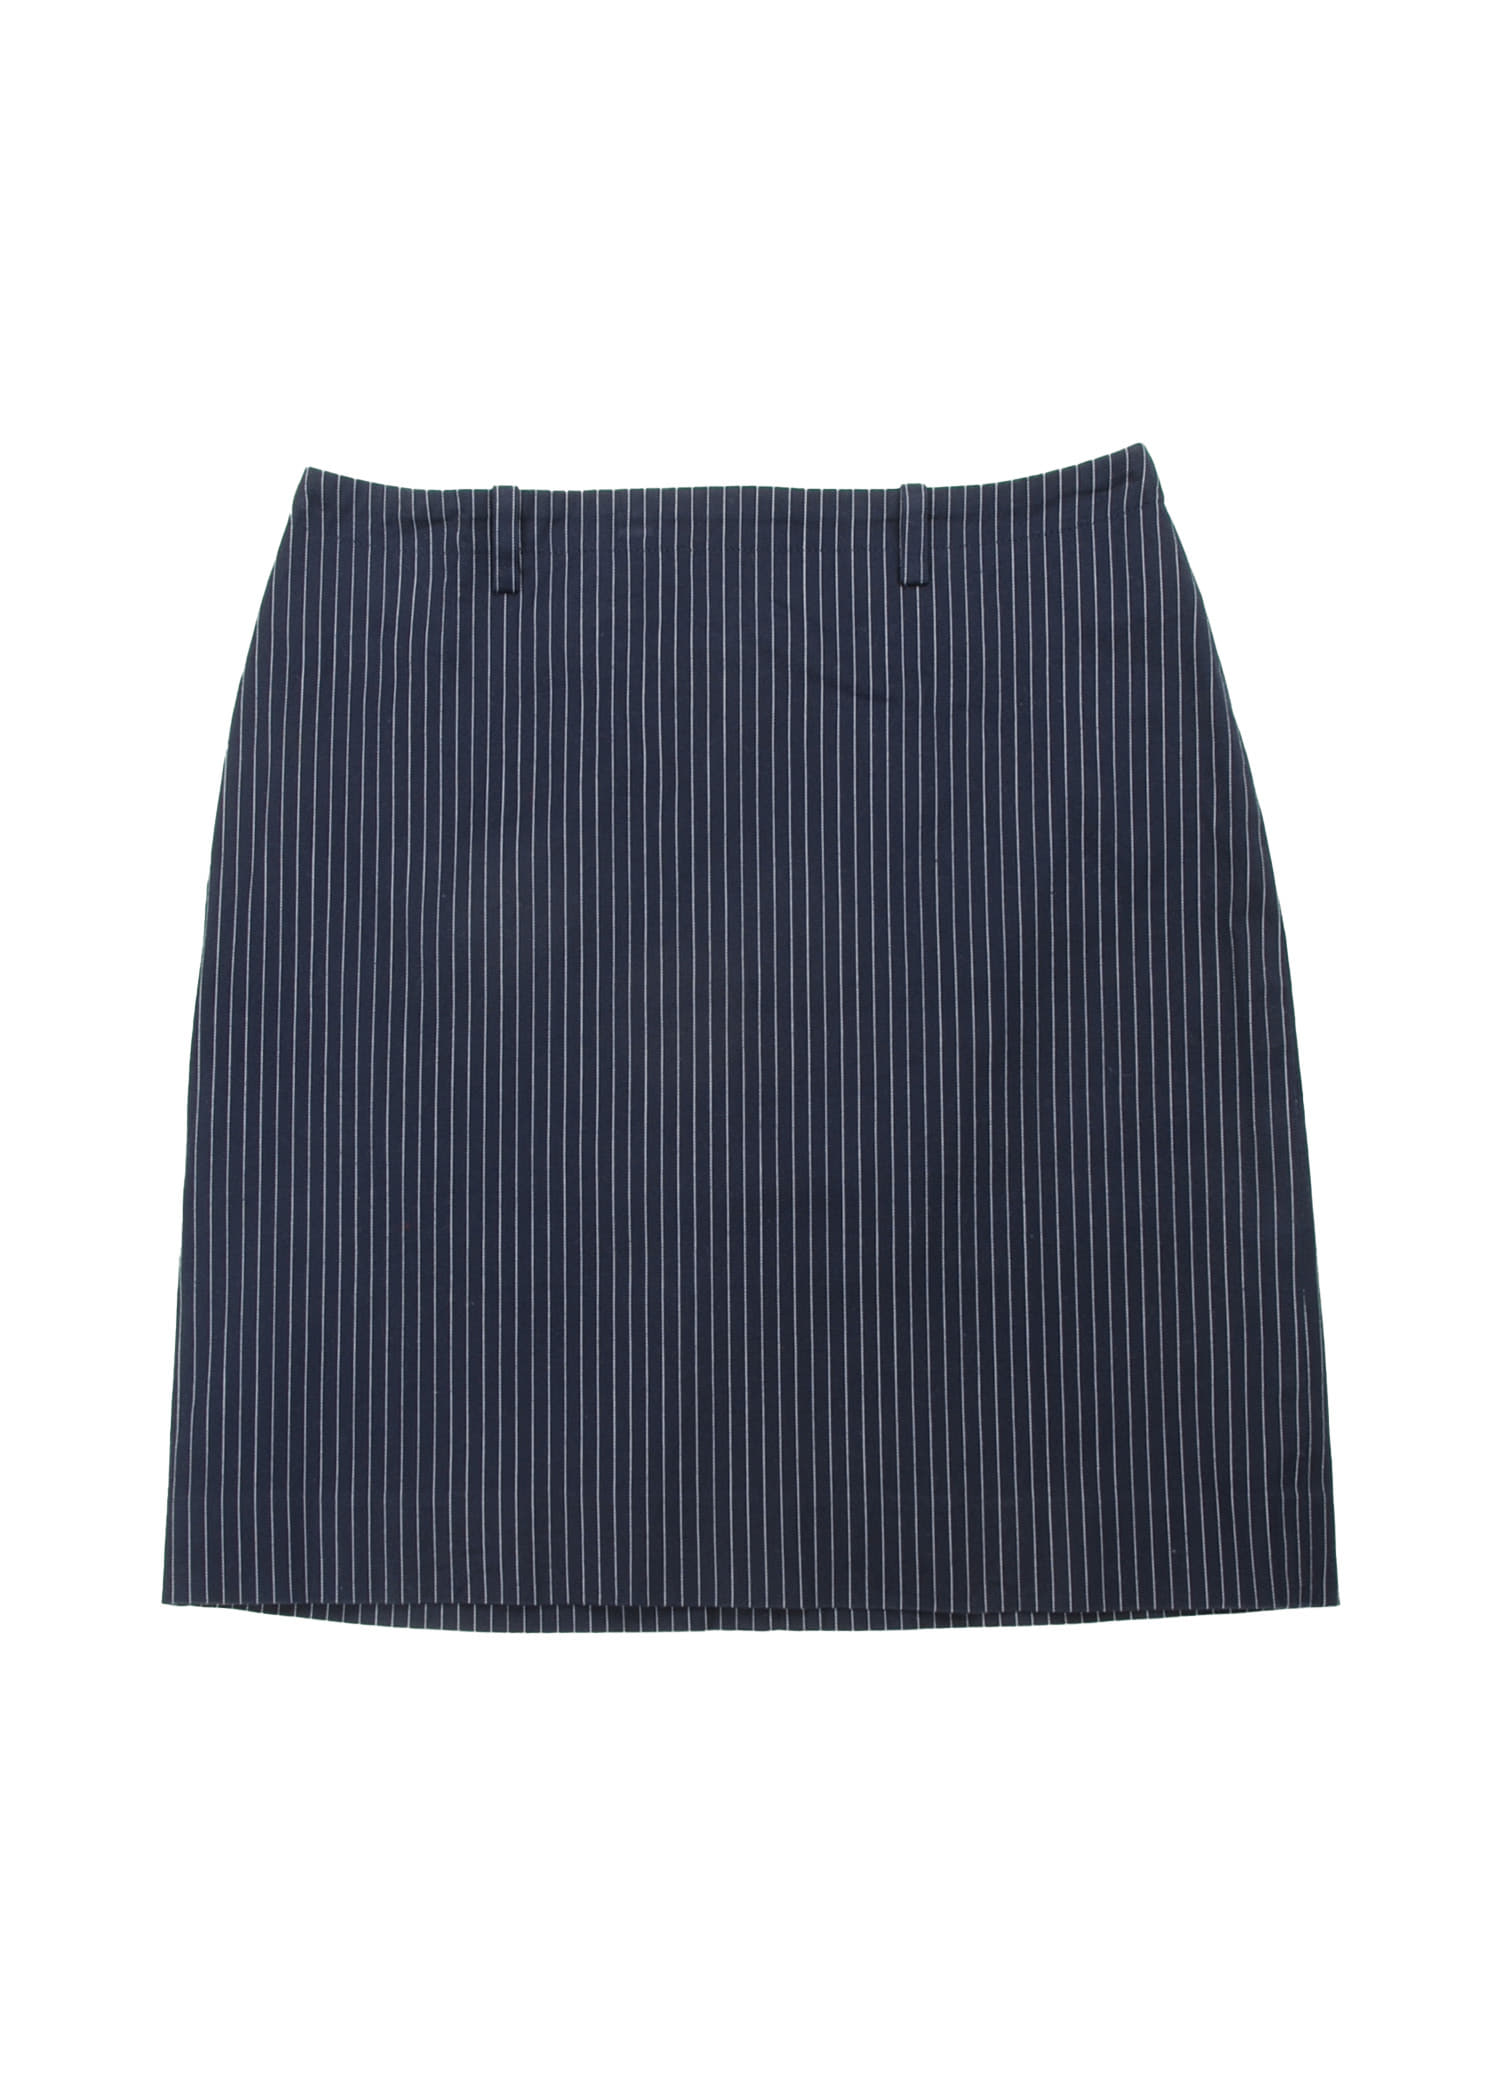 Ralph Lauren stripe skirts